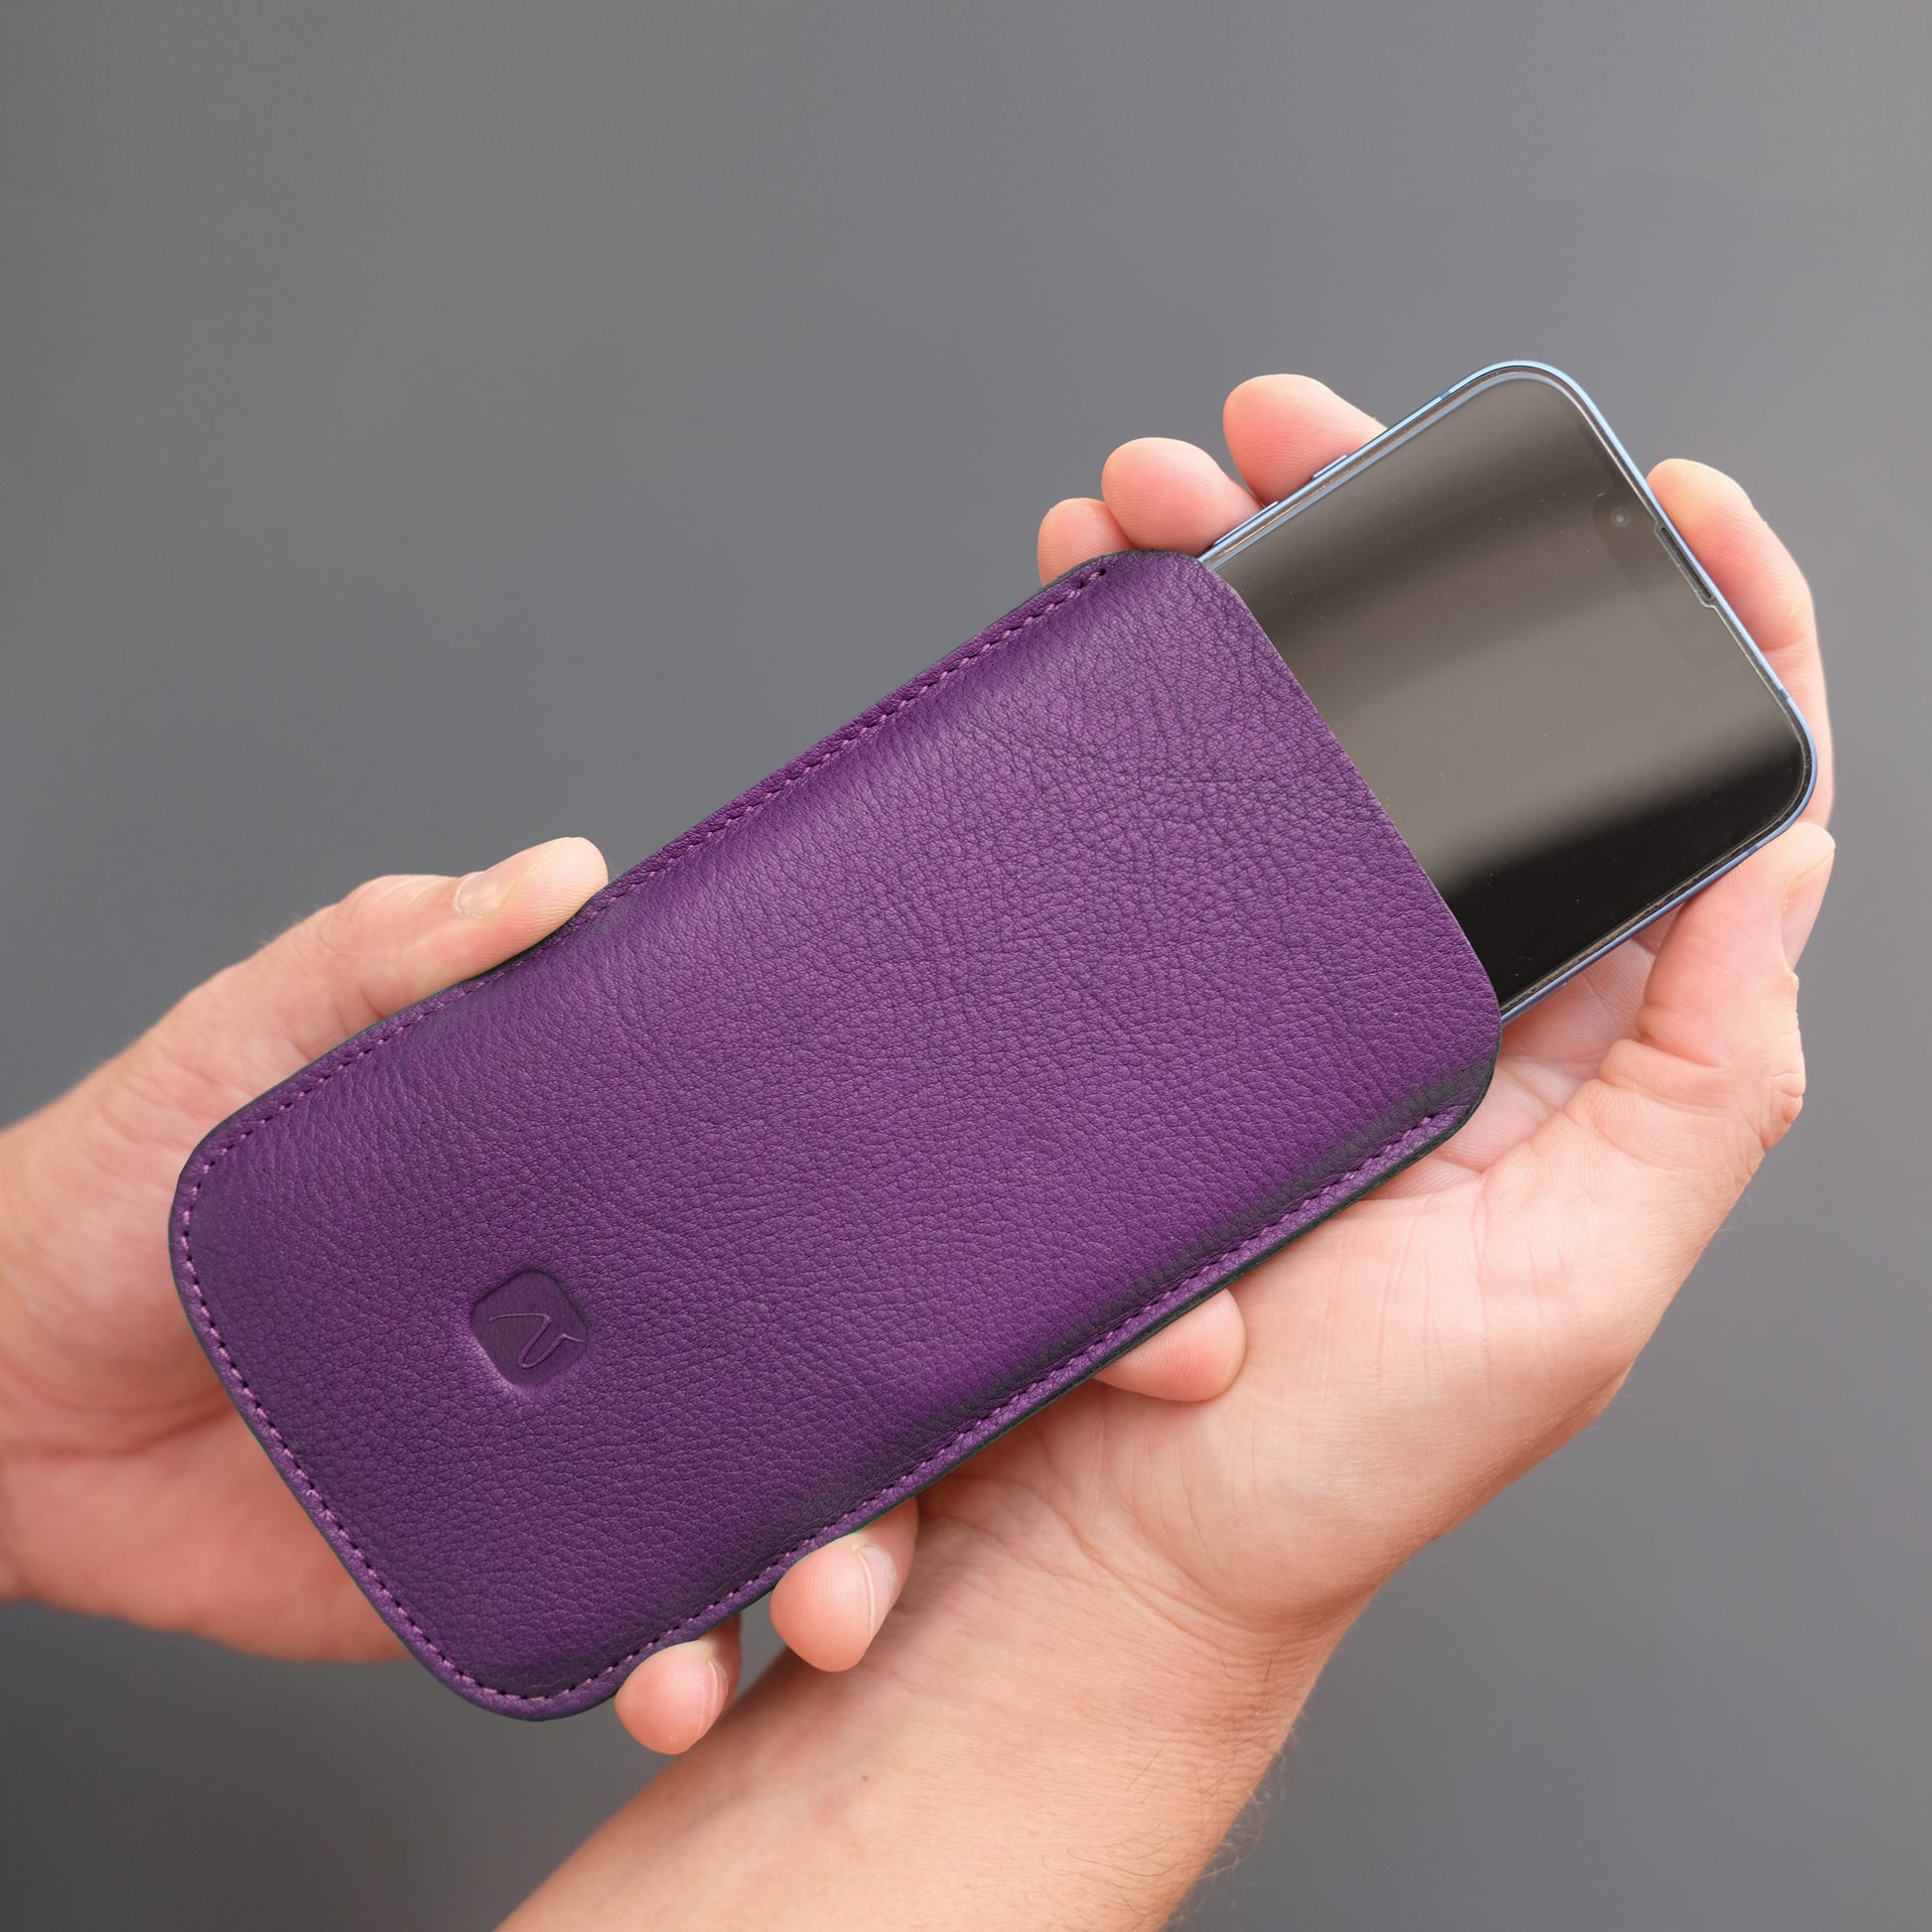 iPhone wird in lila Handyhülle gesteckt